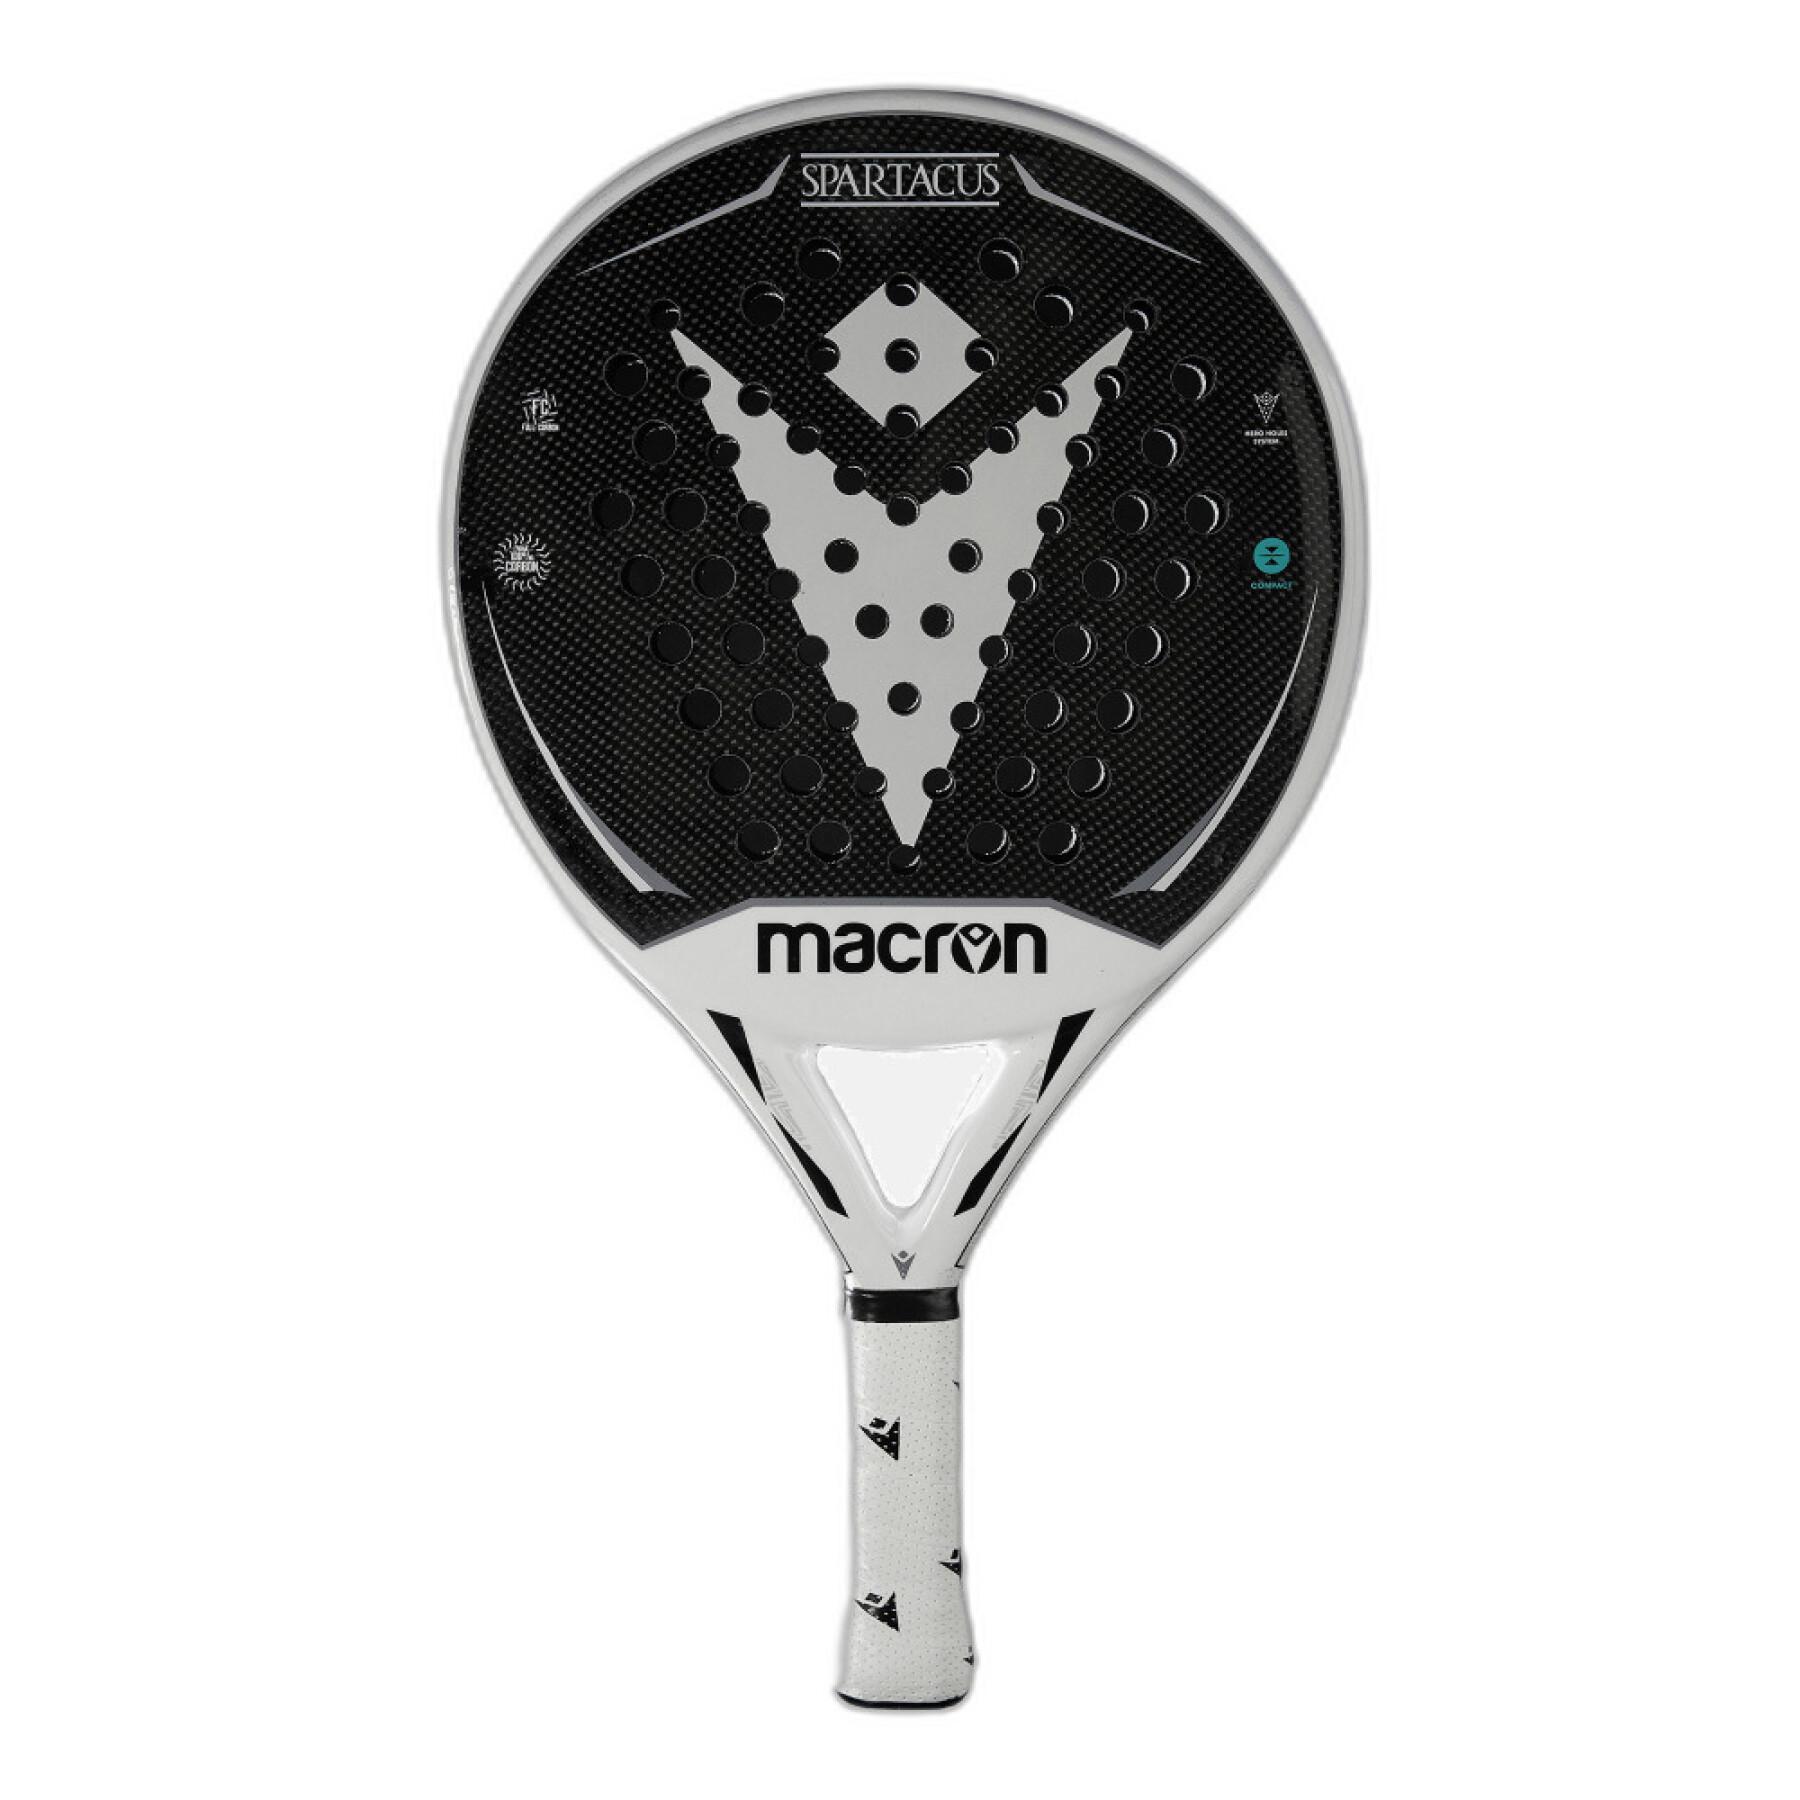 Racchetta da paddle tennis Macron Spartacus Frequency